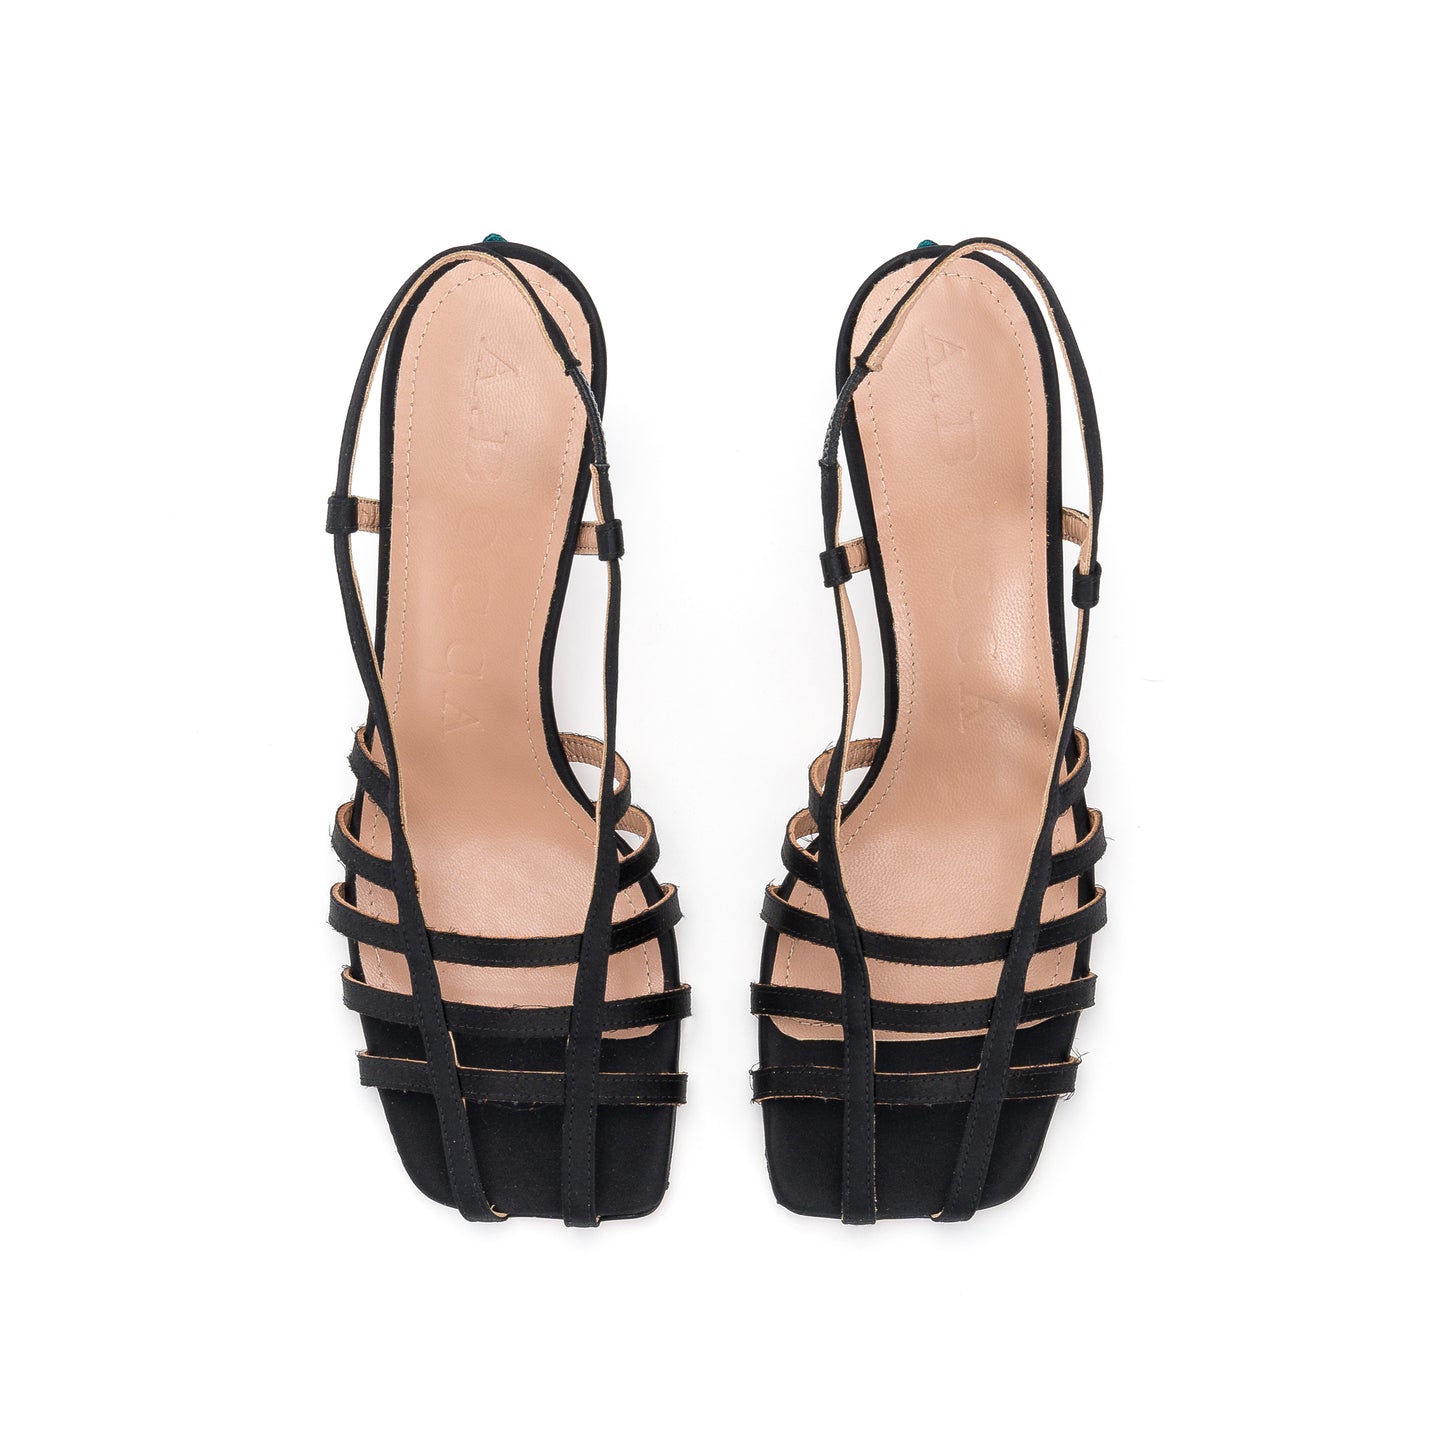 Black satin strap sandal - Second life